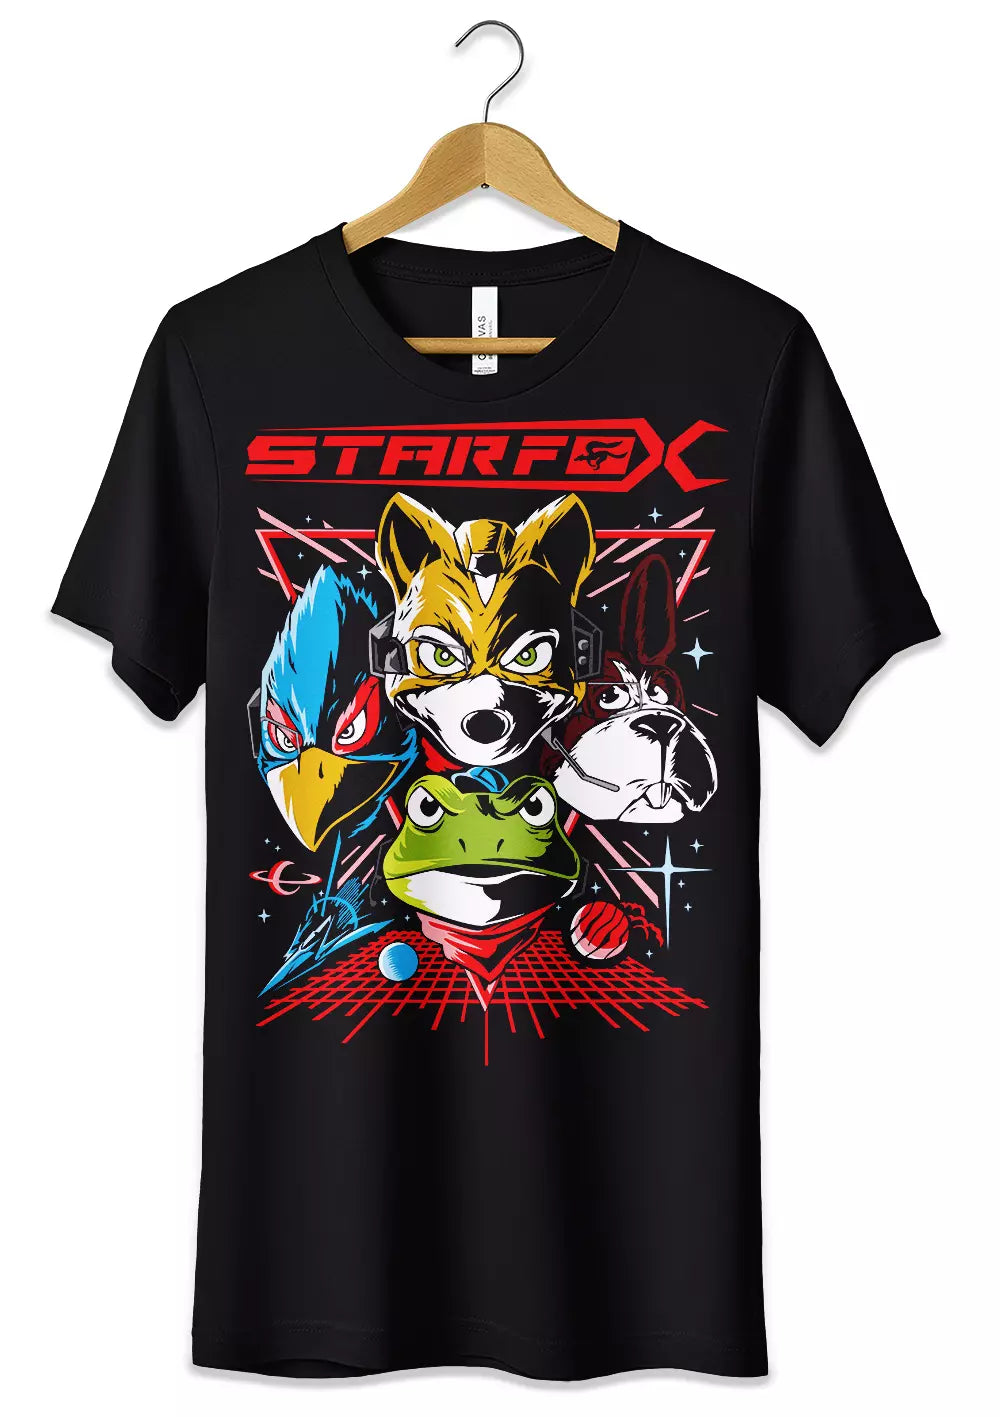 T-Shirt Maglietta Videogames Star Fox, CmrDesignStore, T-Shirt, t-shirt-maglietta-videogames-star-fox, CmrDesignStore